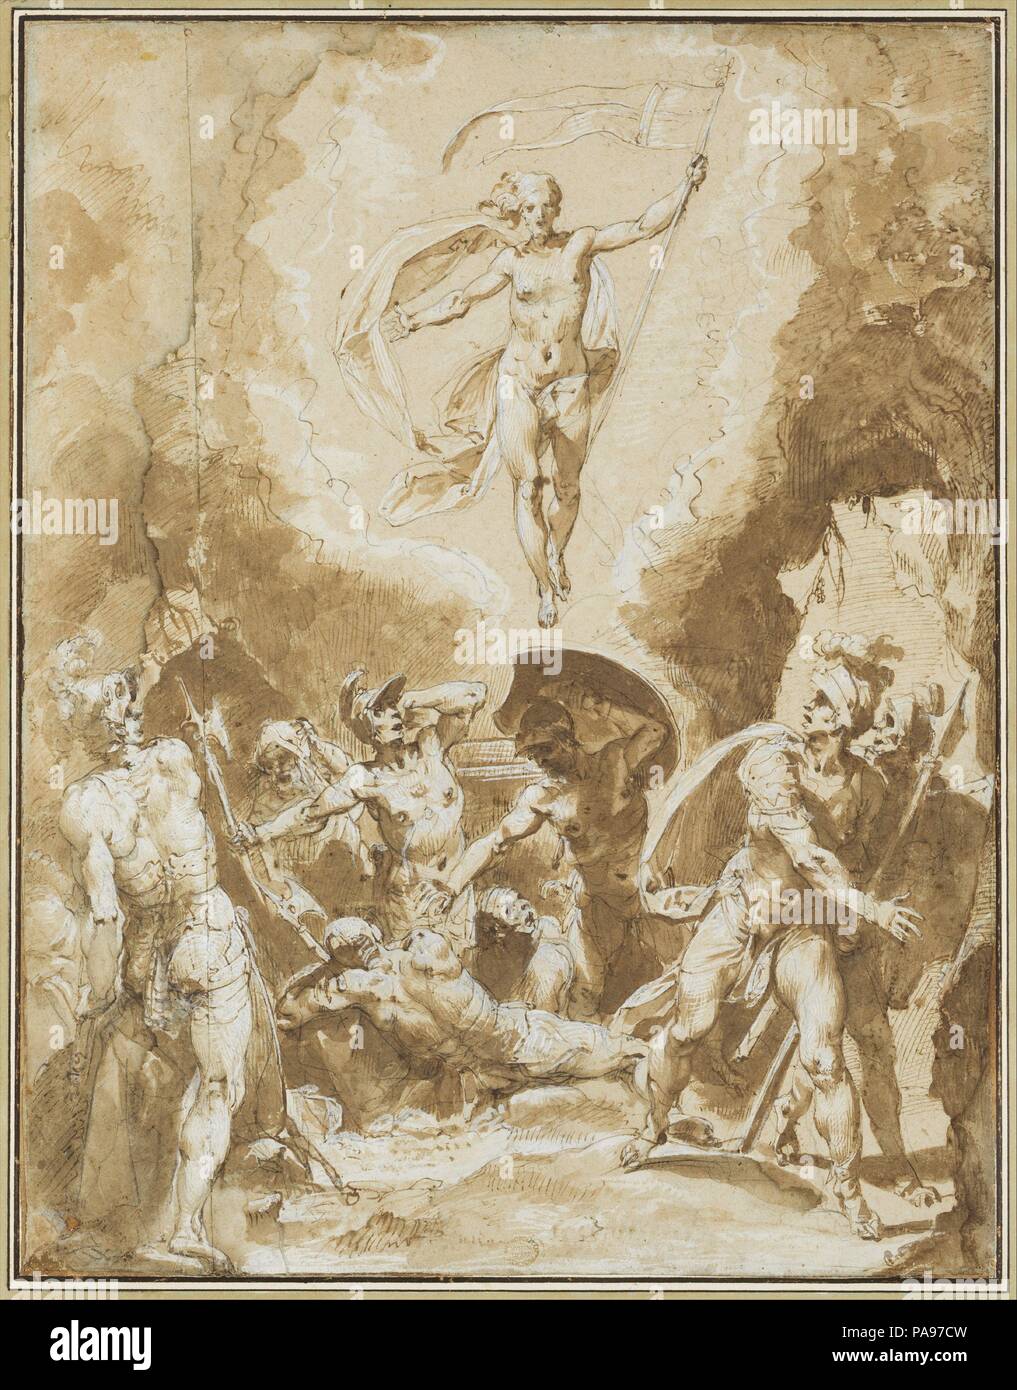 The Resurrection. Artist: Cavaliere d'Arpino (Giuseppe Cesari) (Italian, Arpino 1568-1640 Rome). Dimensions: 16 5/8 x 12 3/4in. (42.2 x 32.4cm). Date: ca. 1600. Museum: Metropolitan Museum of Art, New York, USA. Stock Photo